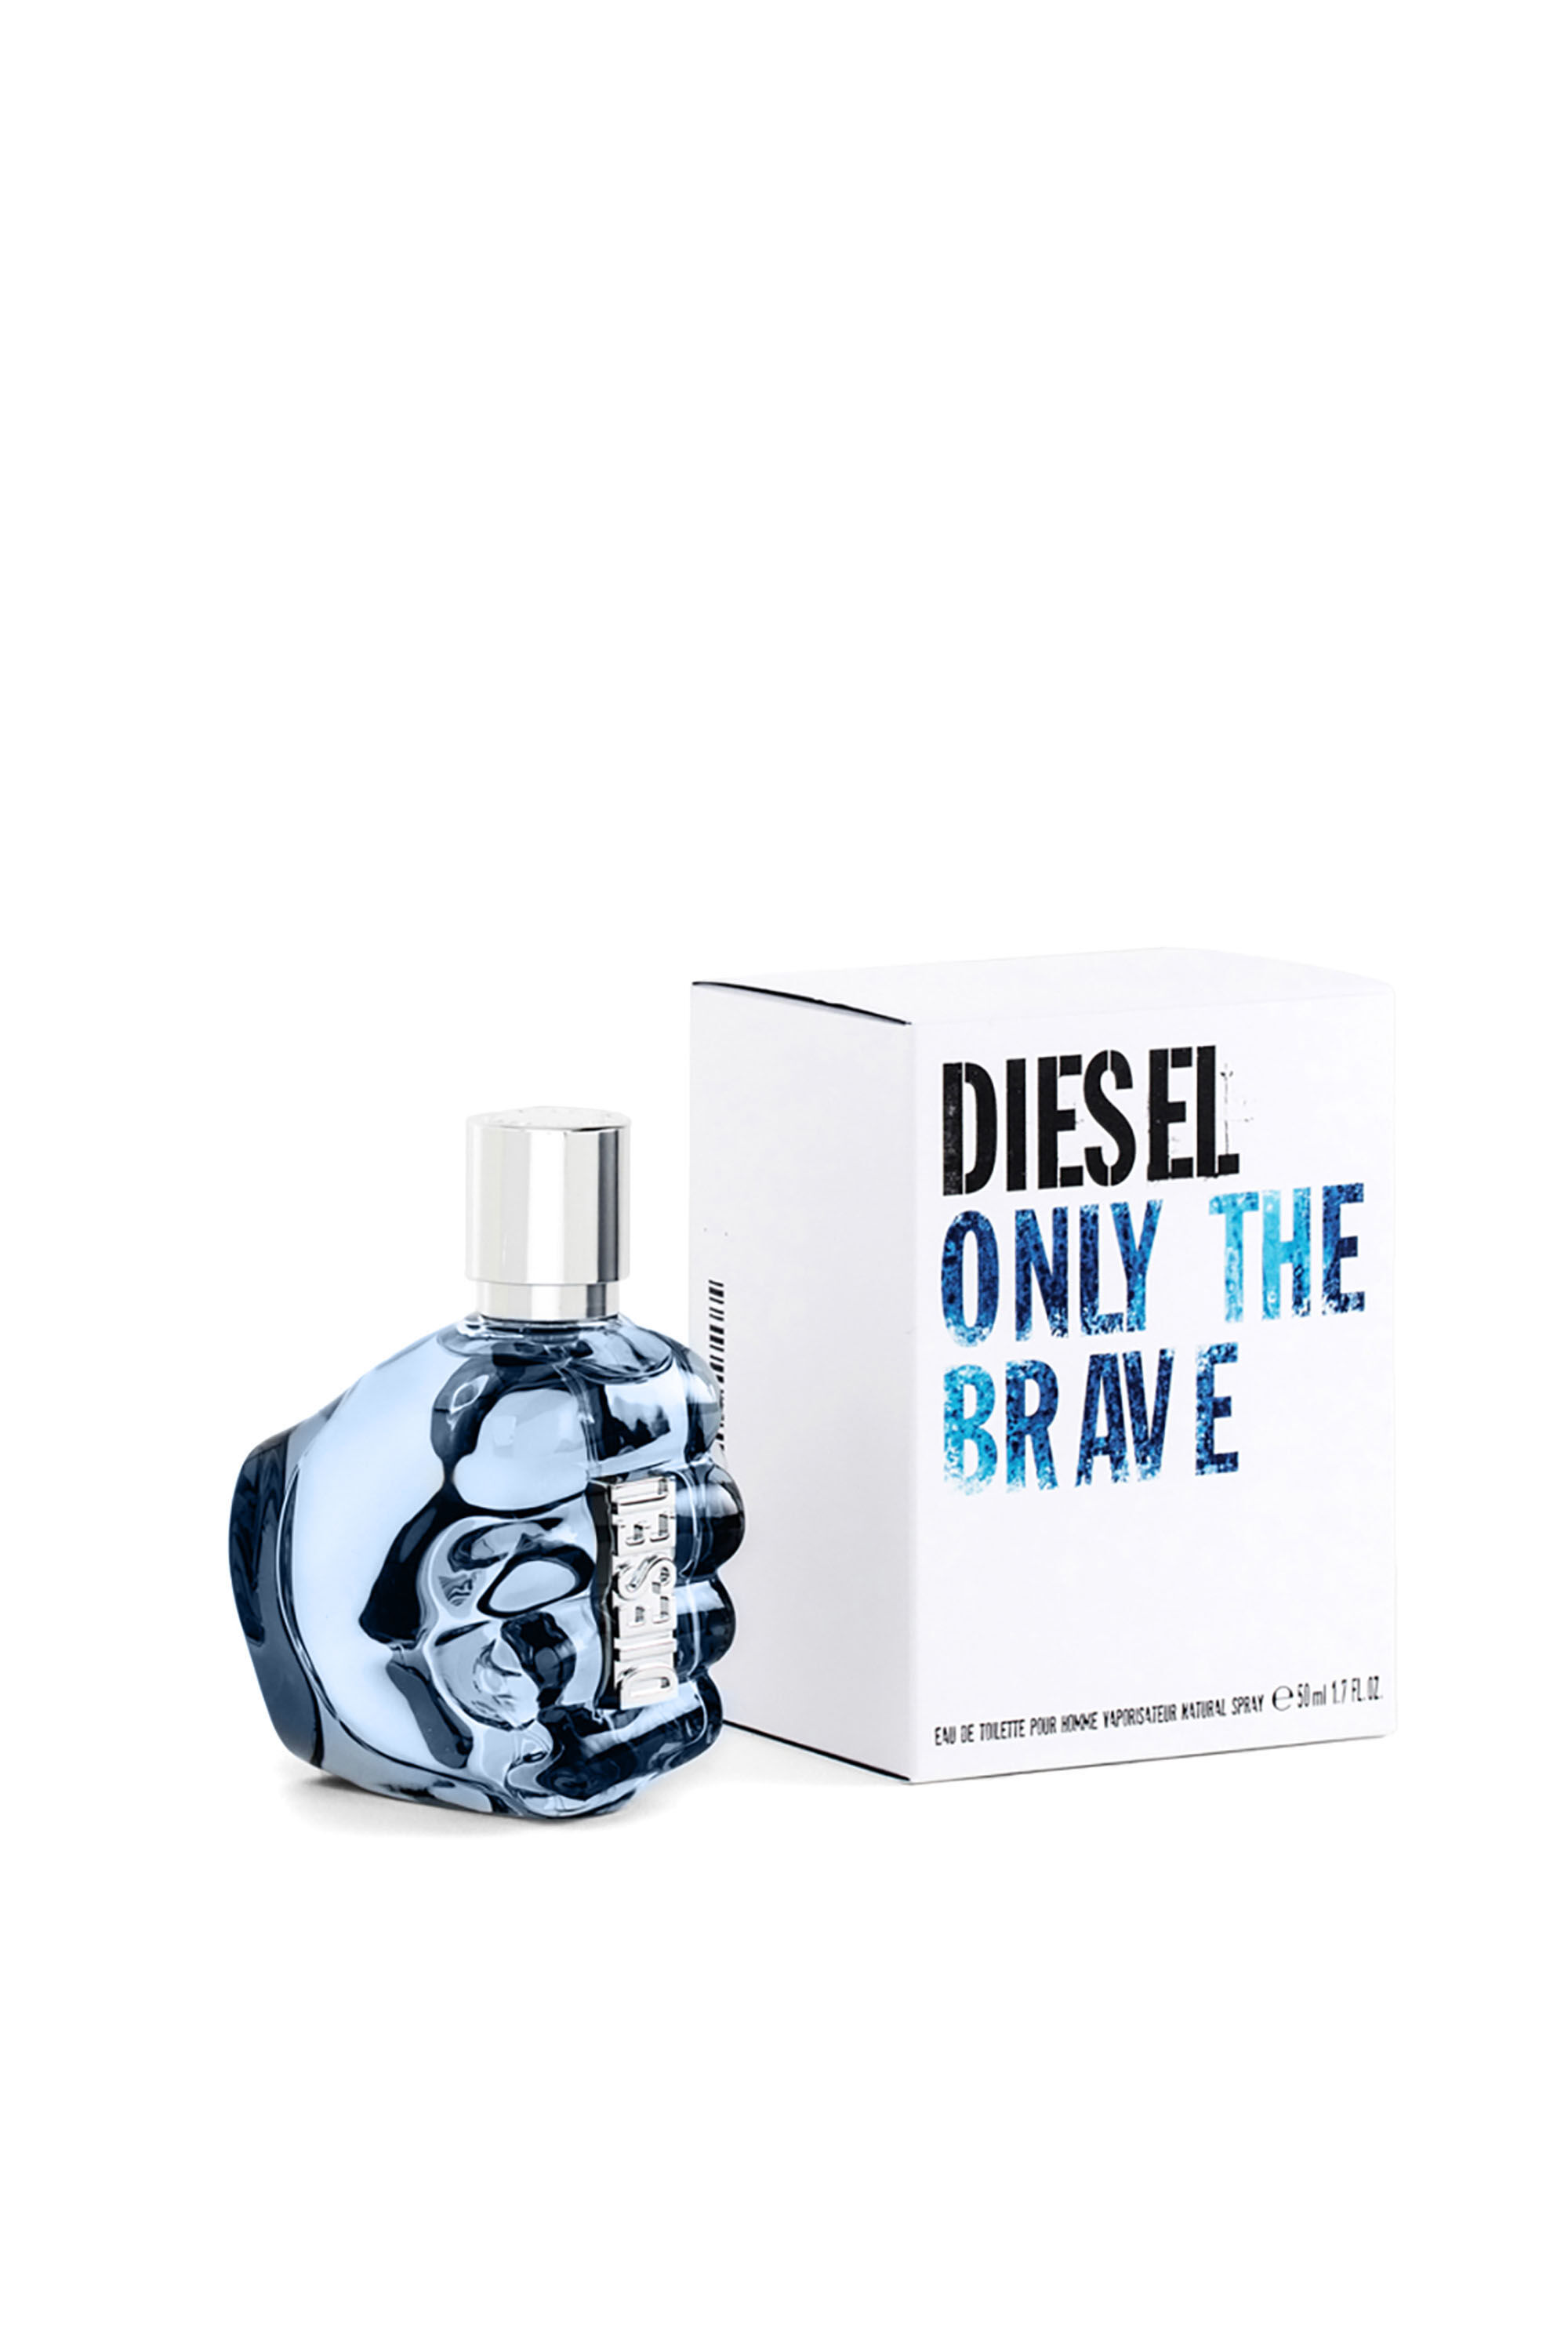 Diesel - ONLY THE BRAVE 50ML, Man Only The Brave 50ml, 1.7 FL.OZ., Eau de Toilette in Blue - Image 2